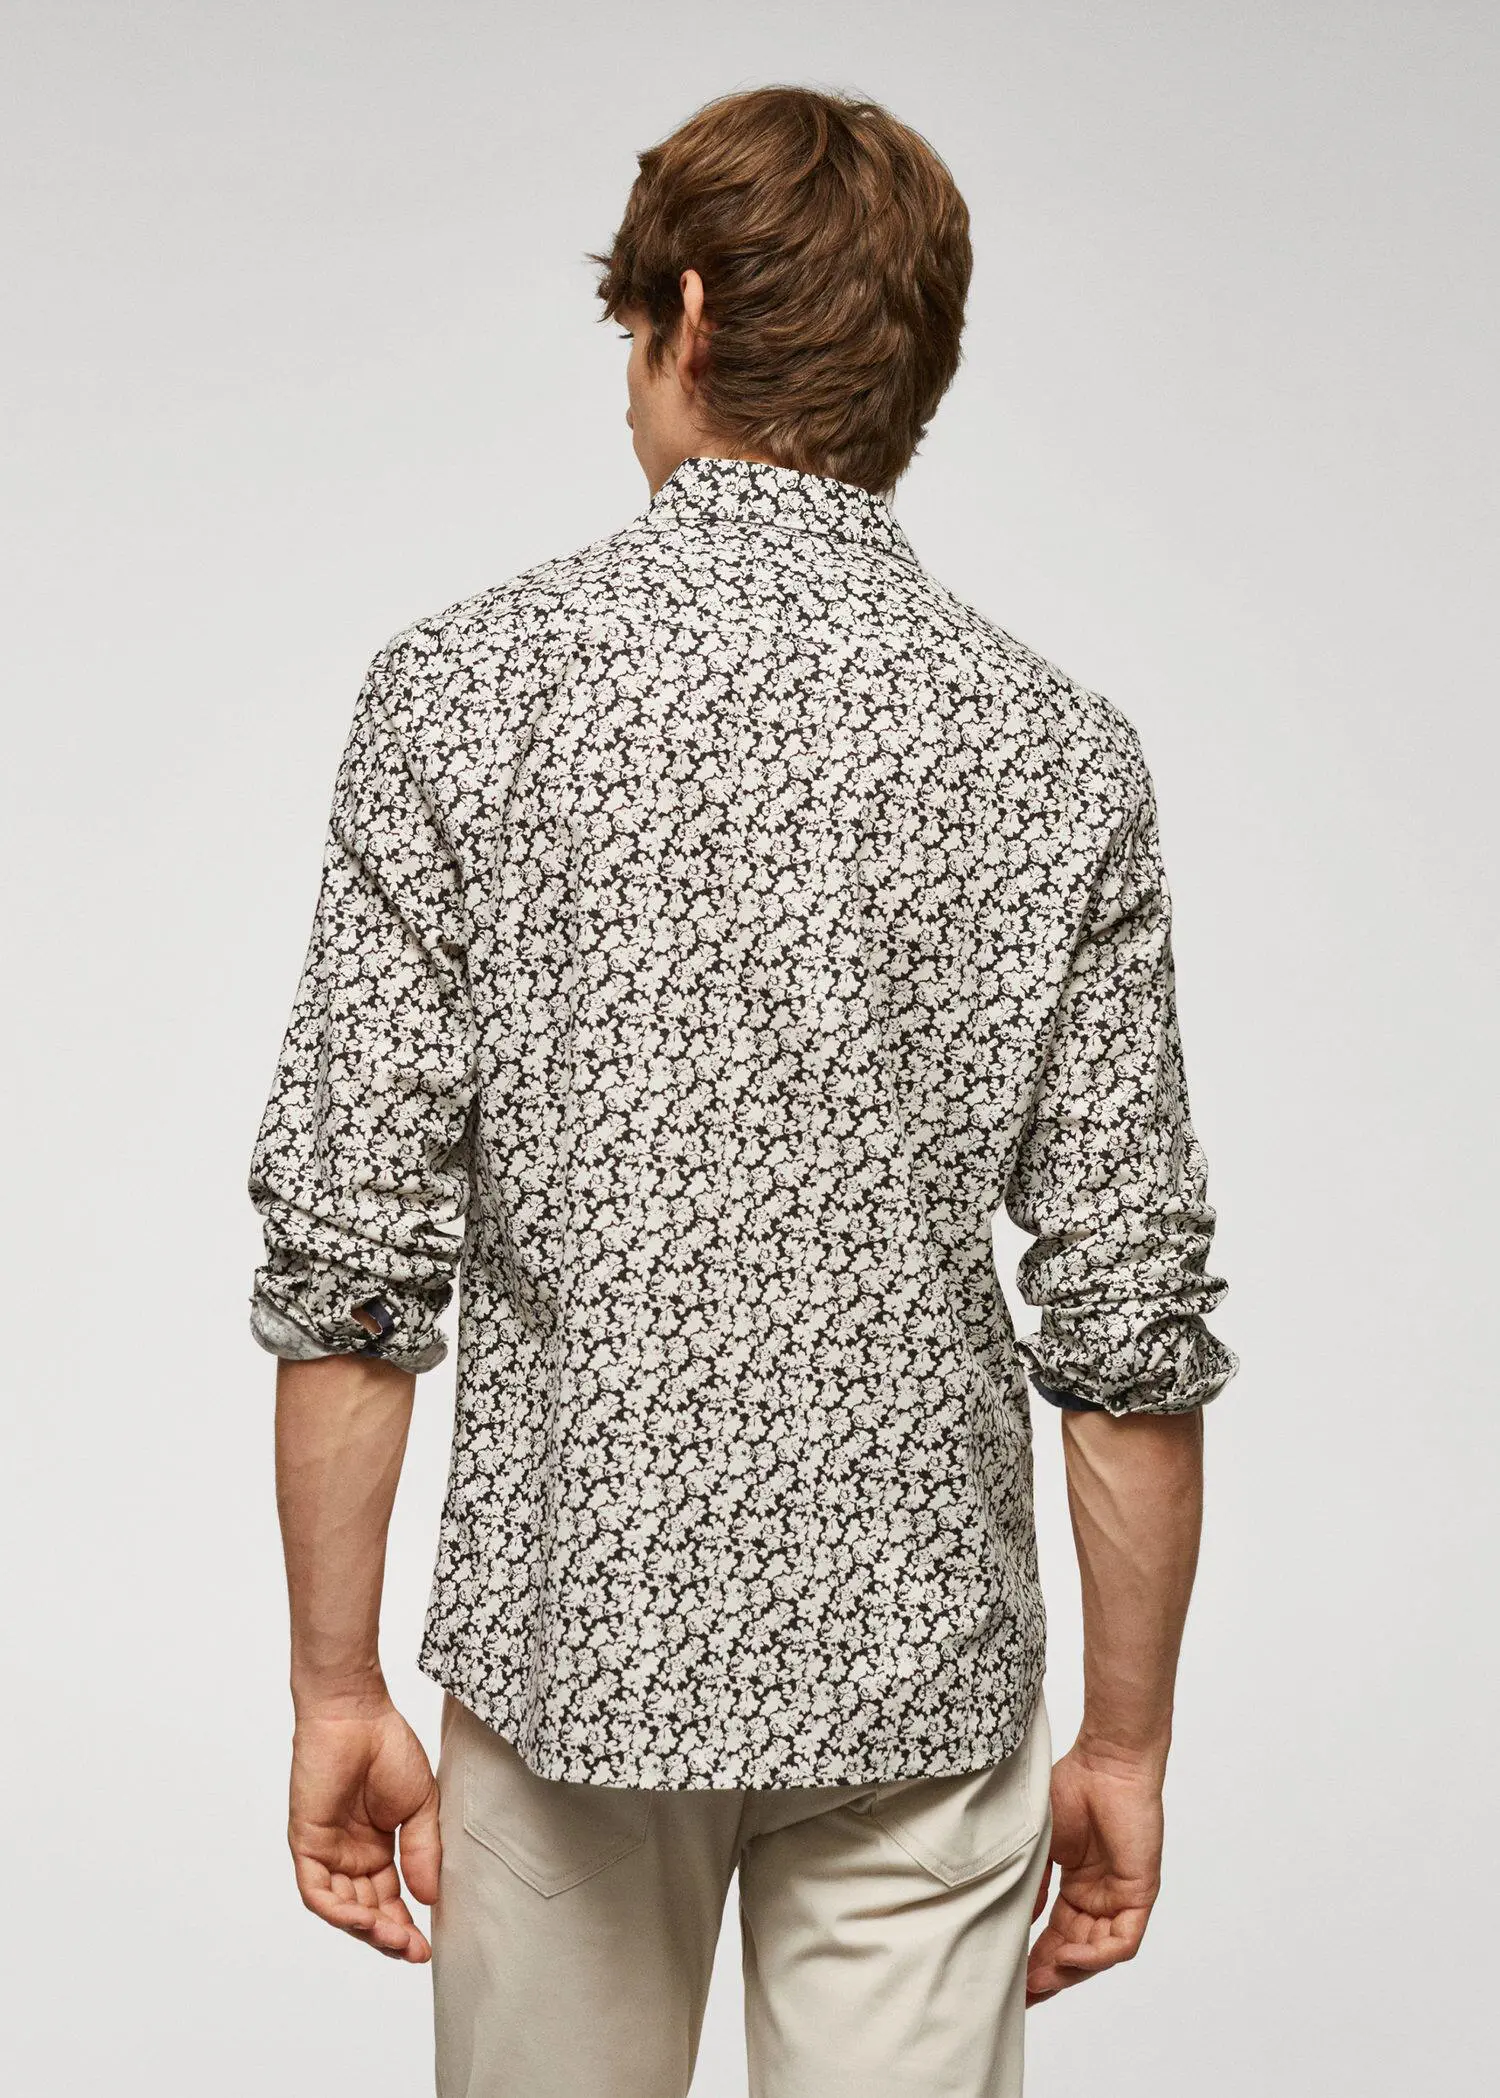 Mango 100% cotton floral-print shirt. 3